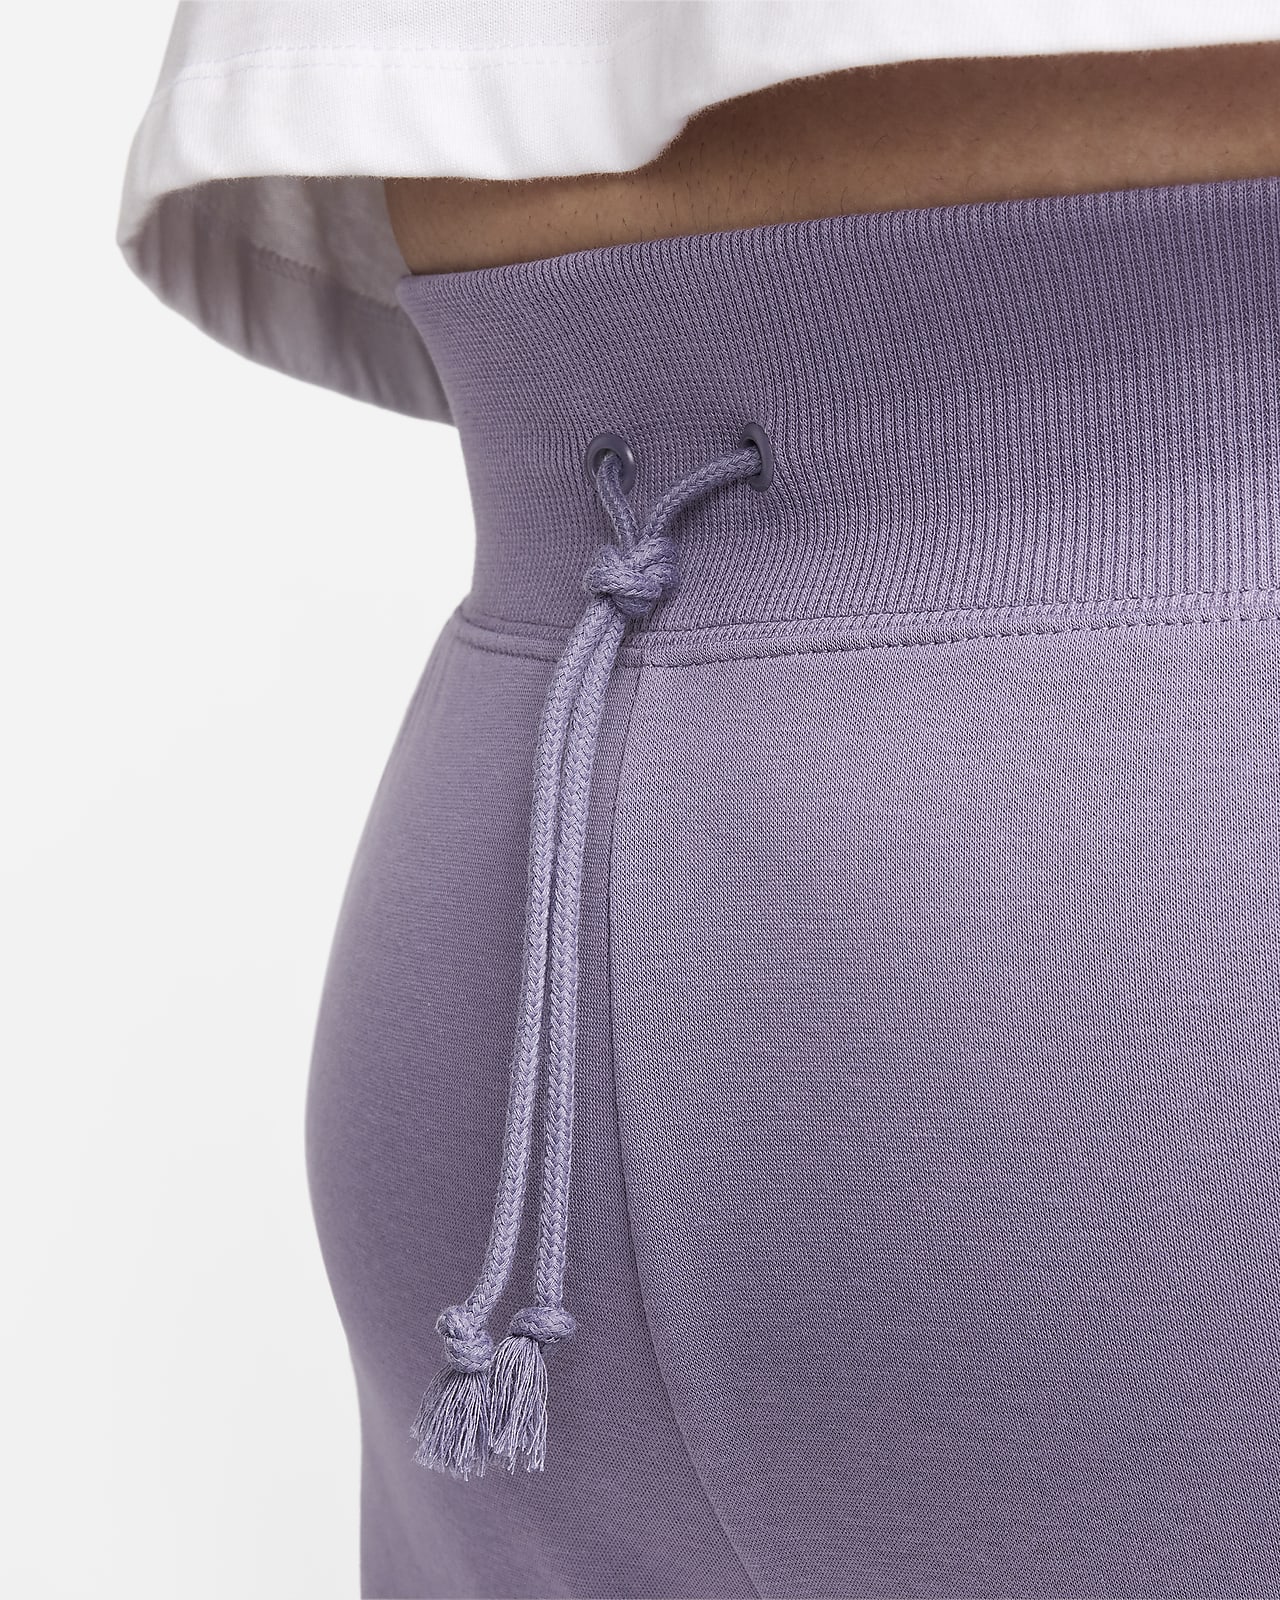 $65 Women's SZ XXL Nike Fleece Sweatpants-no top Purple DQ5615 430